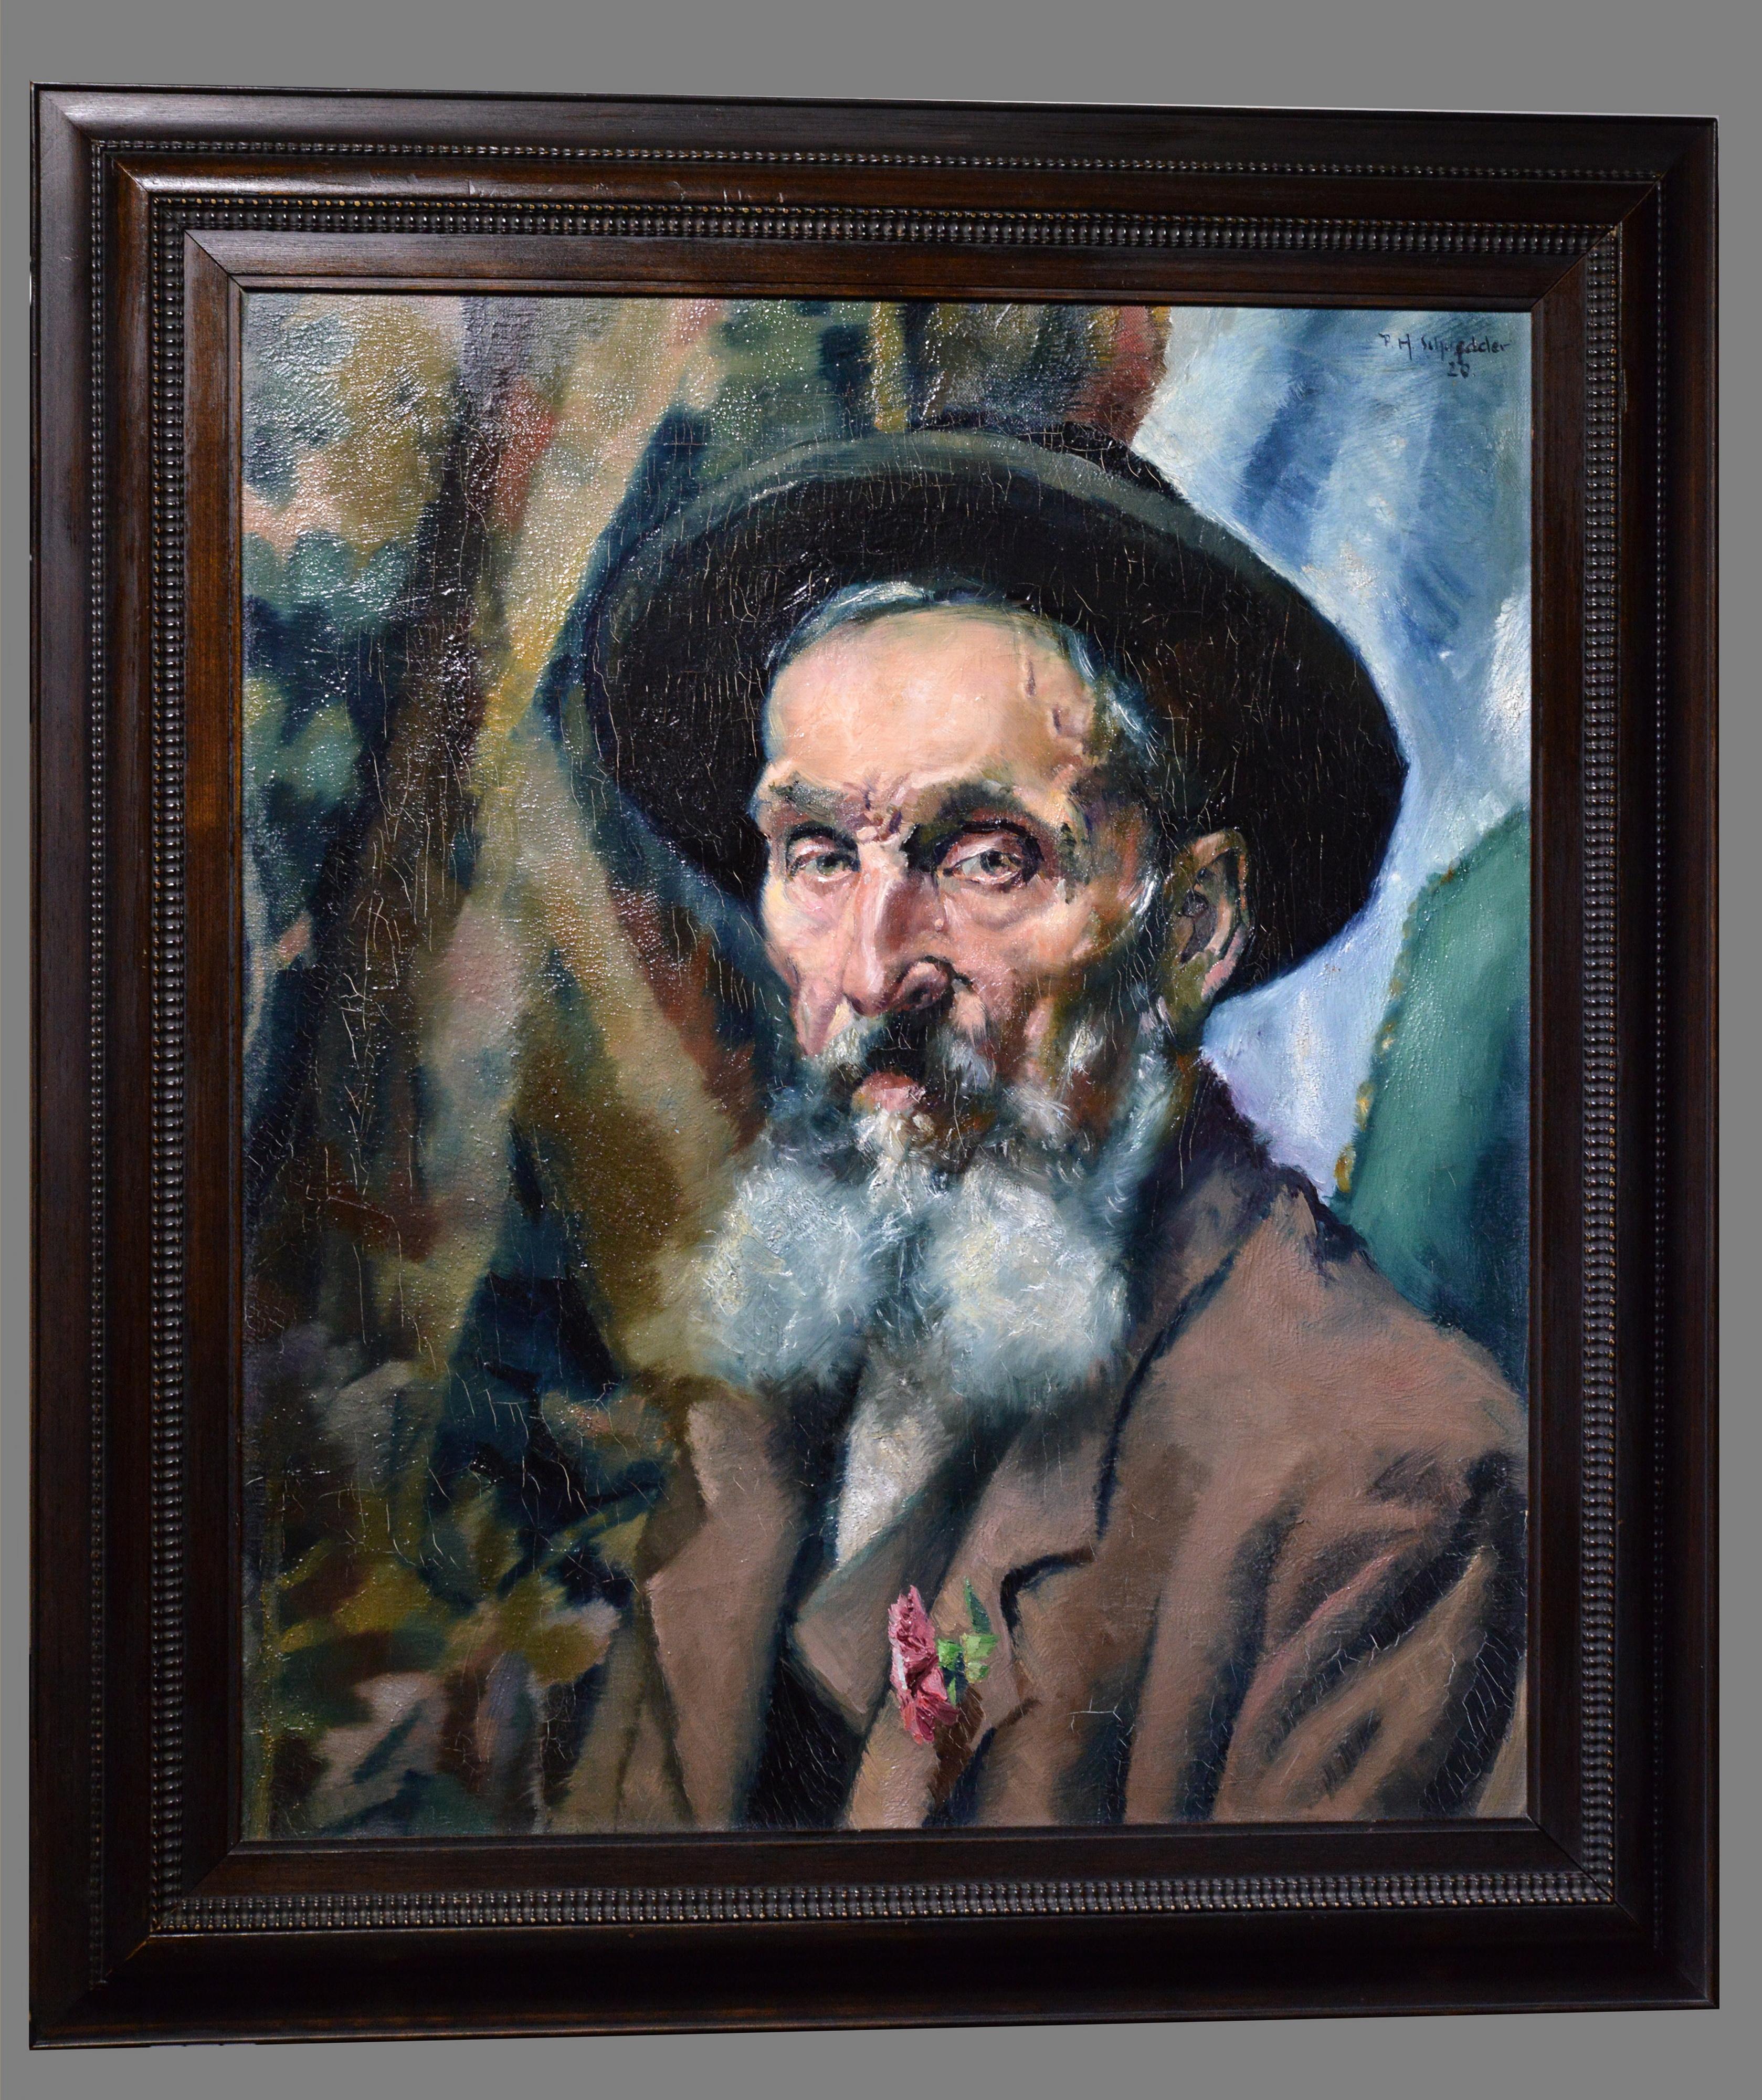 Modernist portrait Piercing gaze of elderly Jew German master 1920 Oil painting - Painting by Paul Hermann Schoedder